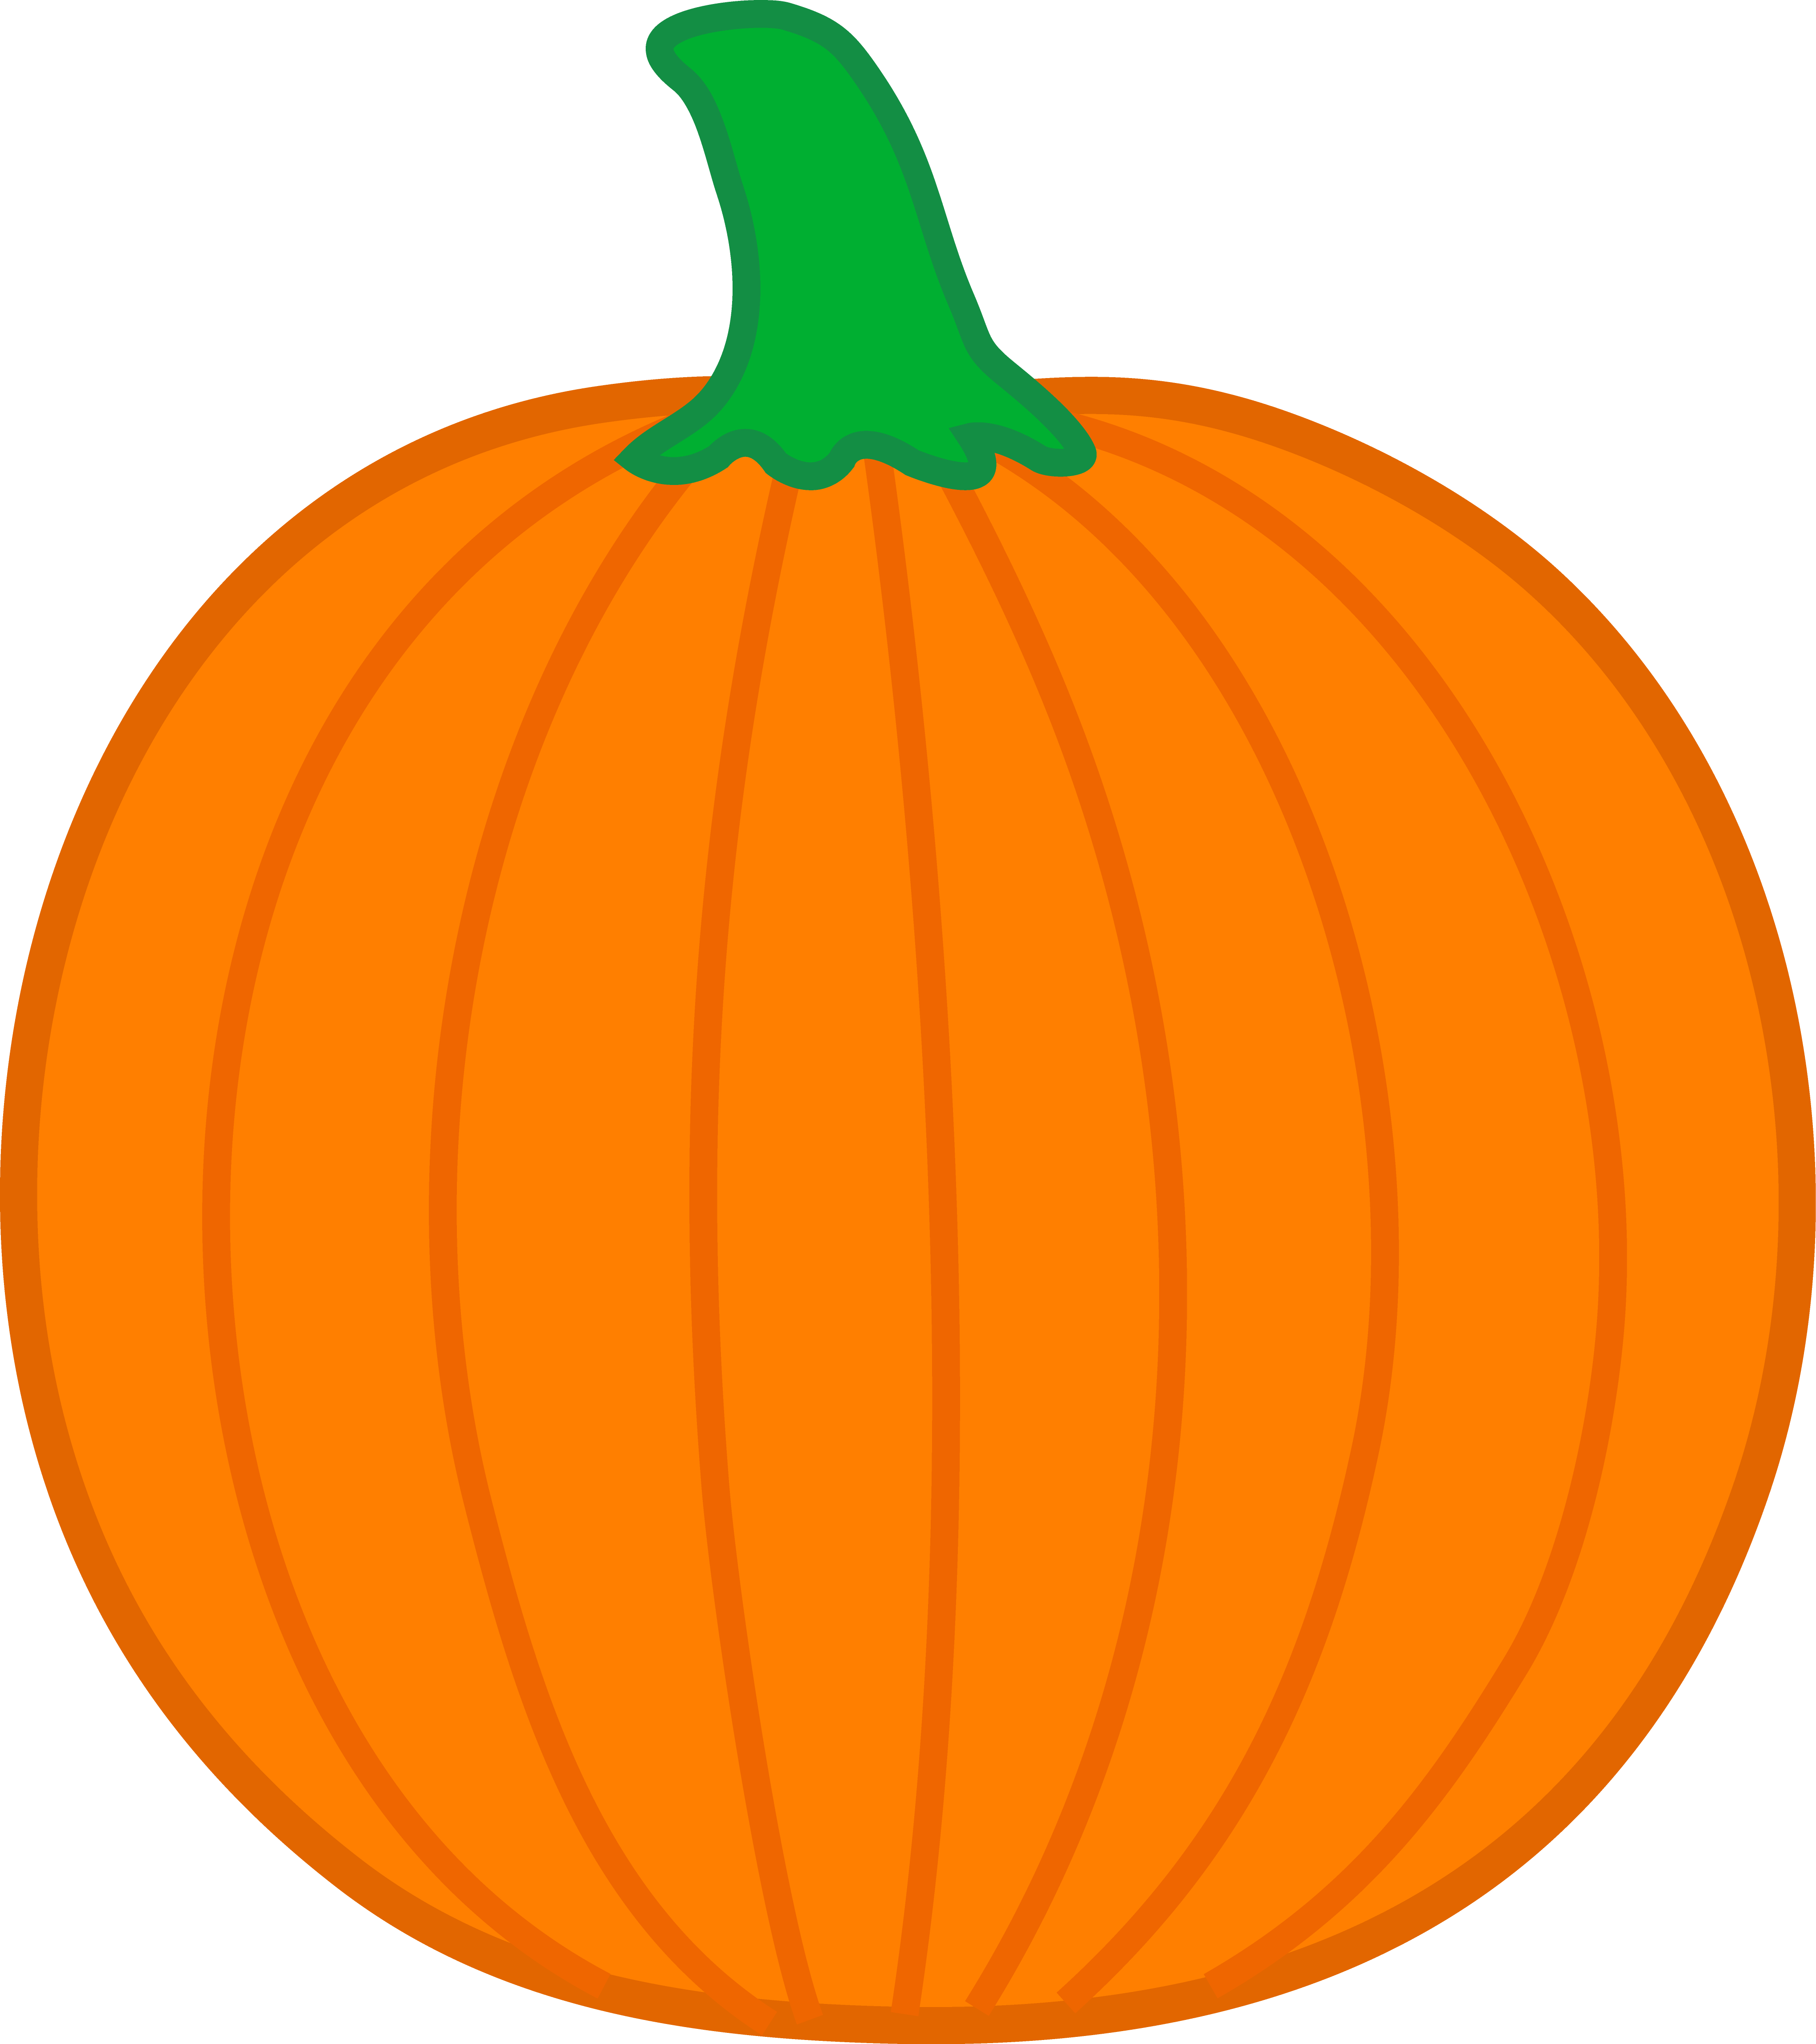 Simple Orange Halloween Pumpkin